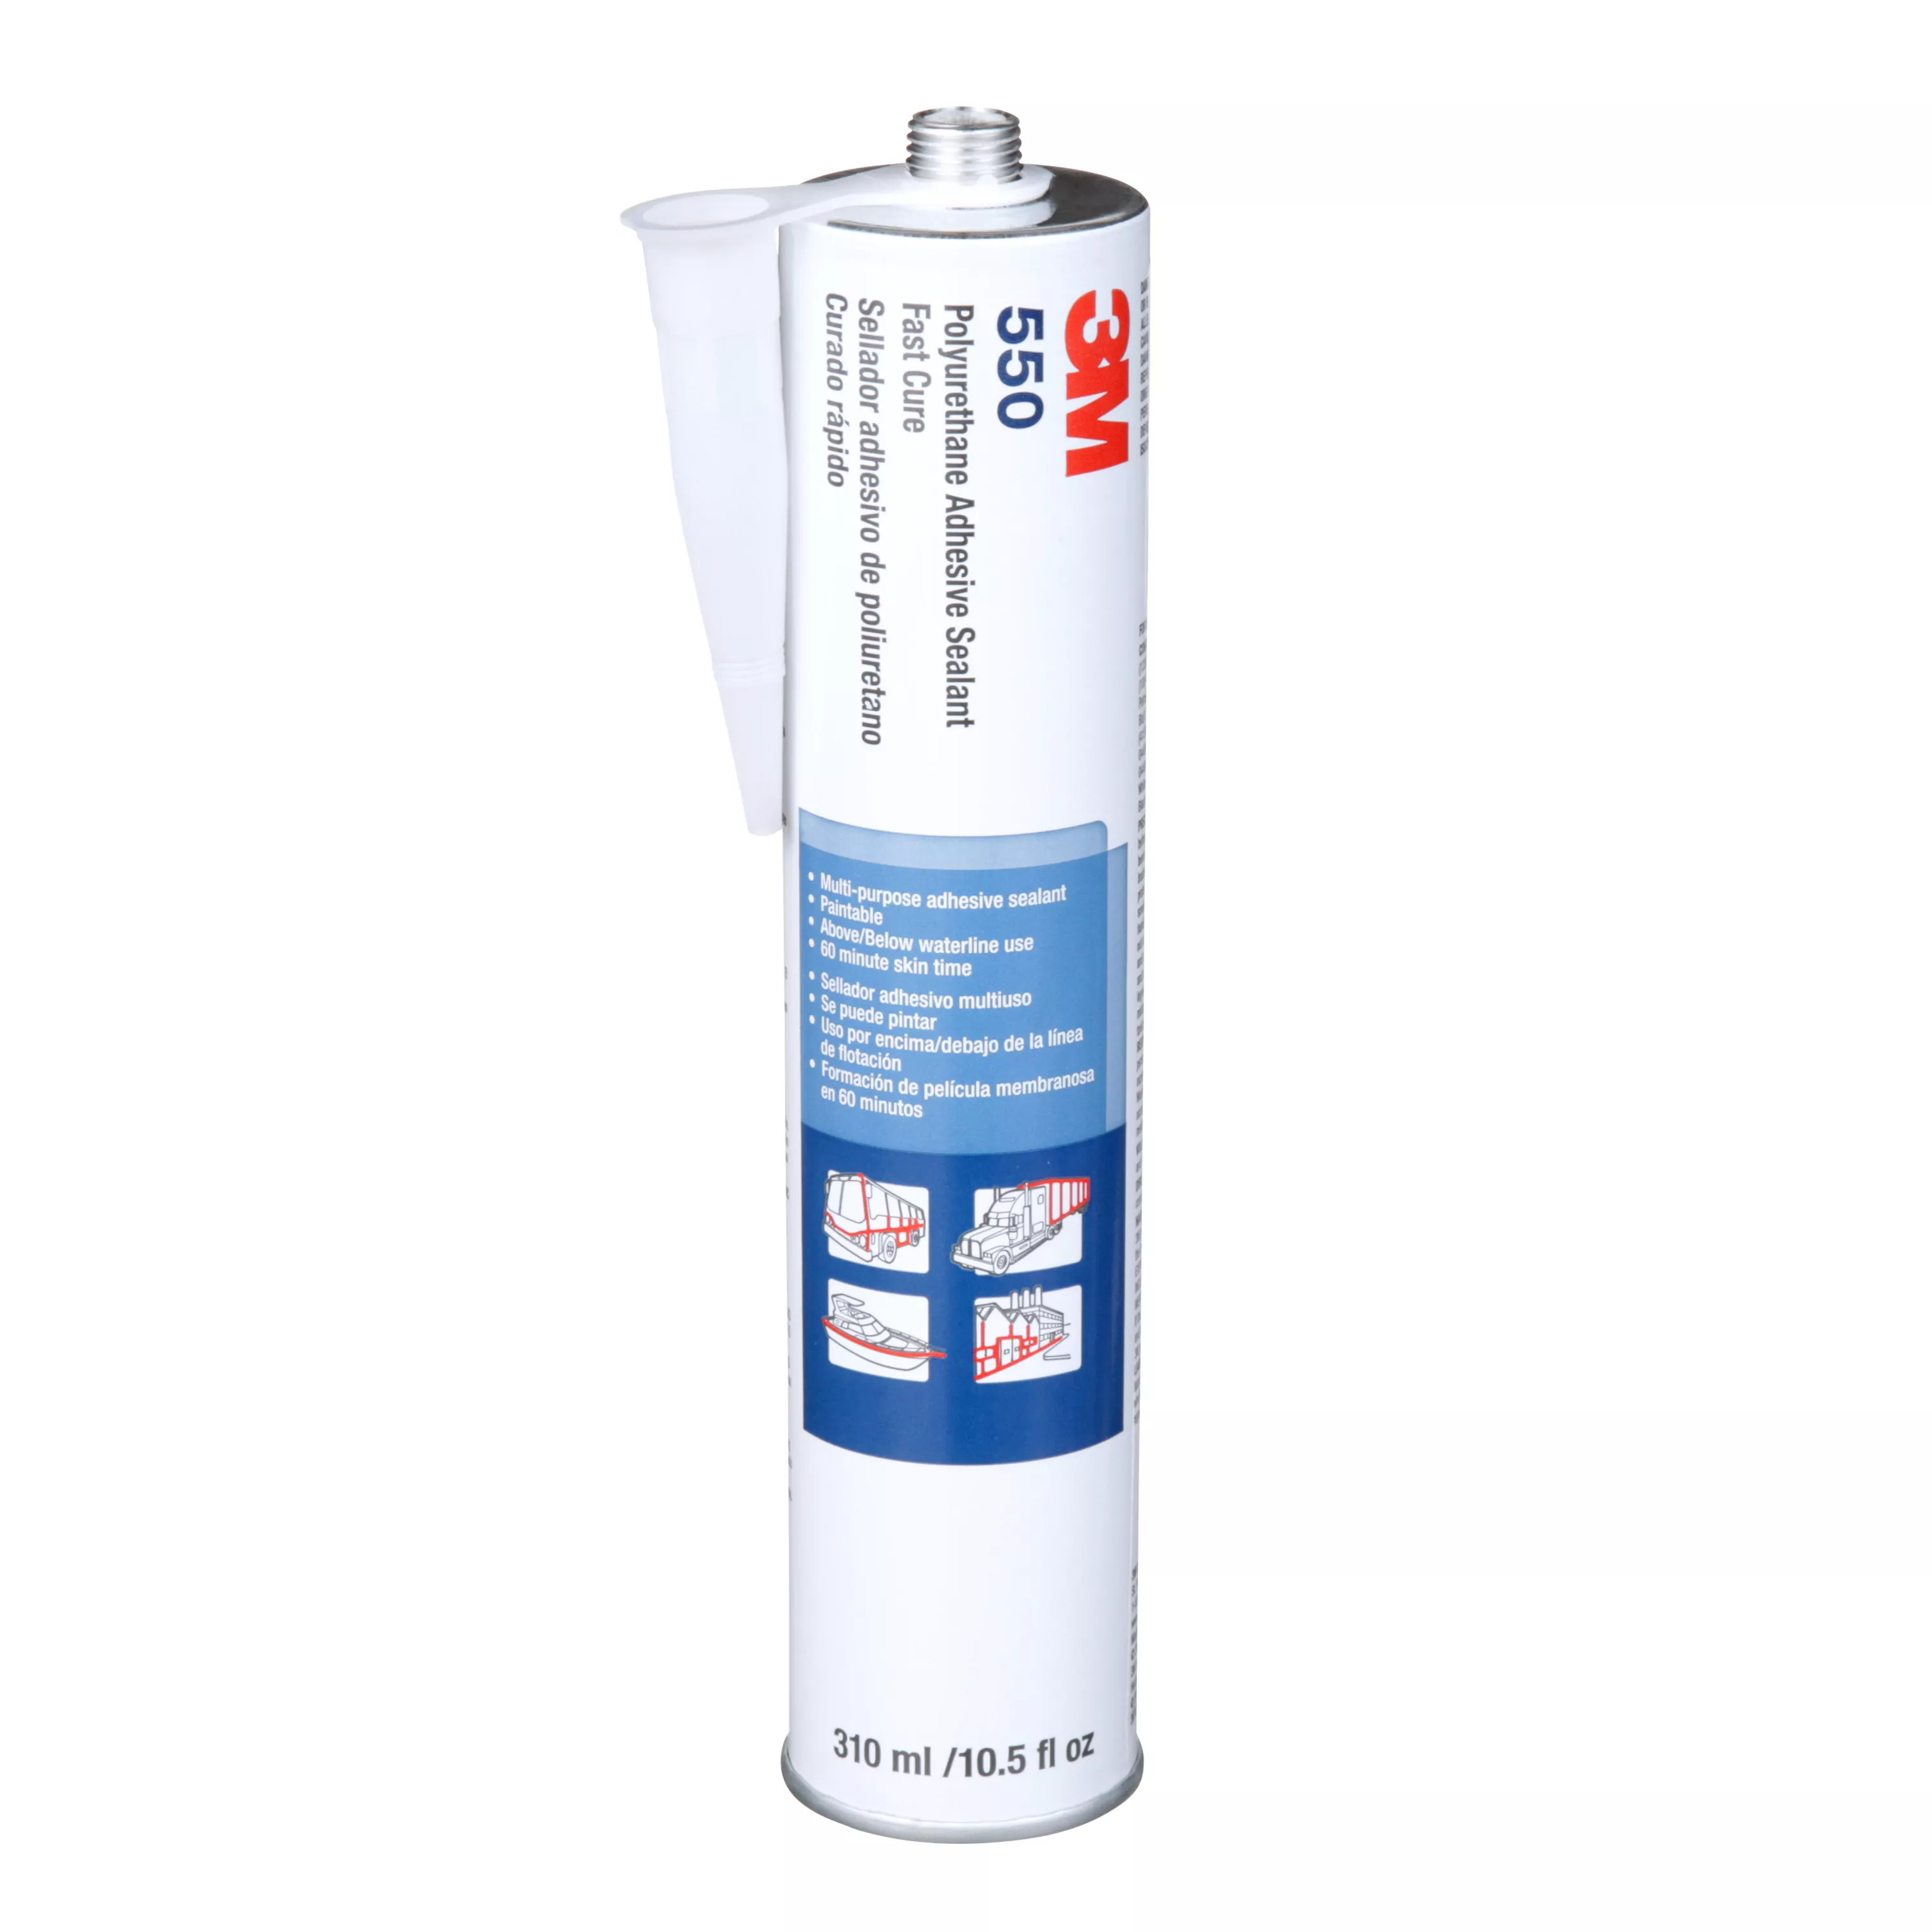 3M™ Polyurethane Adhesive Sealant 550FC Fast Cure, White, 310 mL
Cartridge, 12/Case